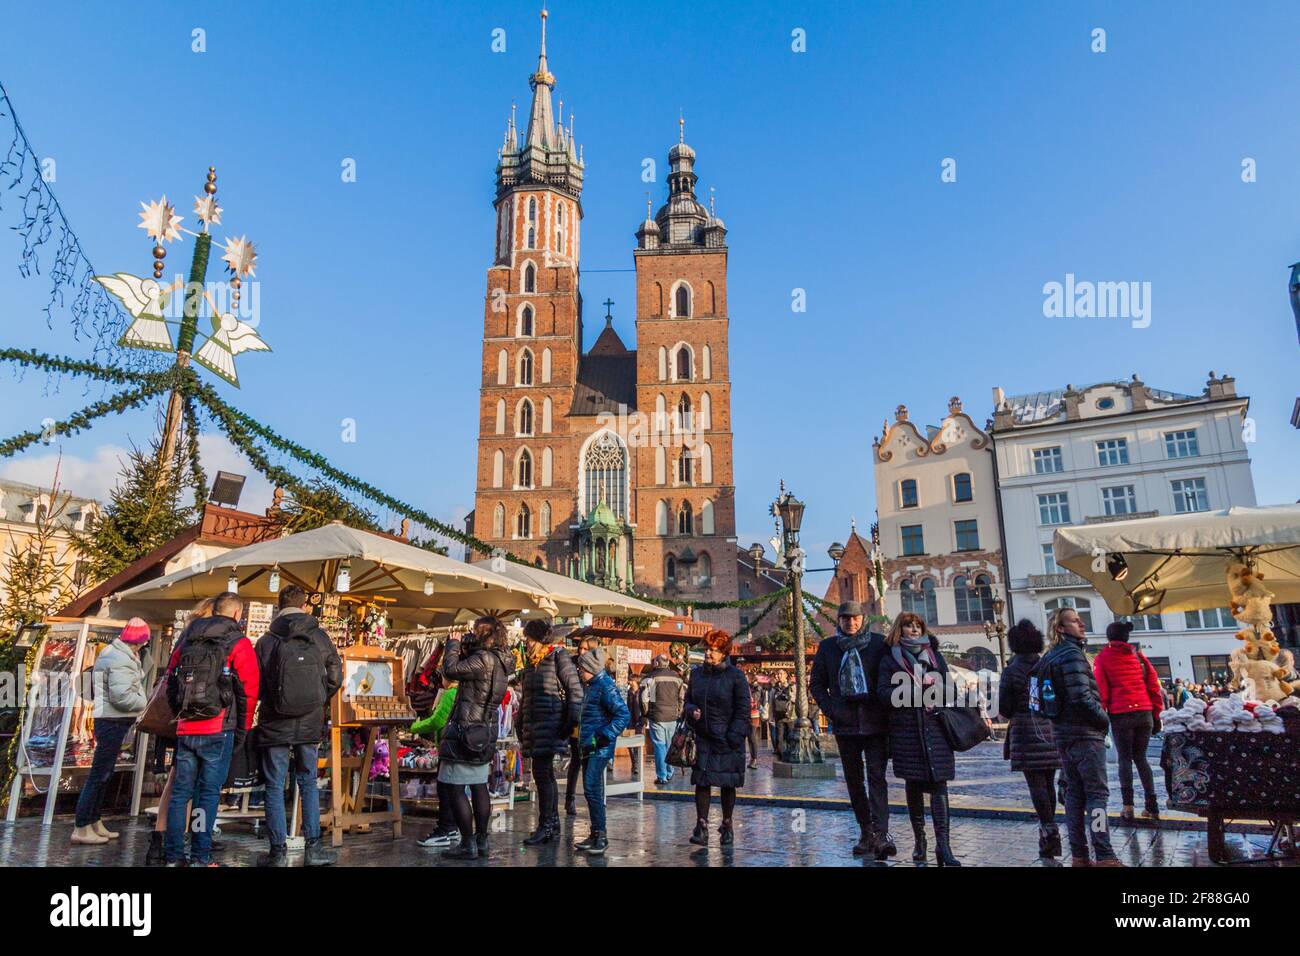 KRAKOW, POLAND - DECEMBER 2, 2017: Christmas market stalls at the medieval square Rynek Glowny with St. Mary's Basilica in Krakow, Poland Stock Photo